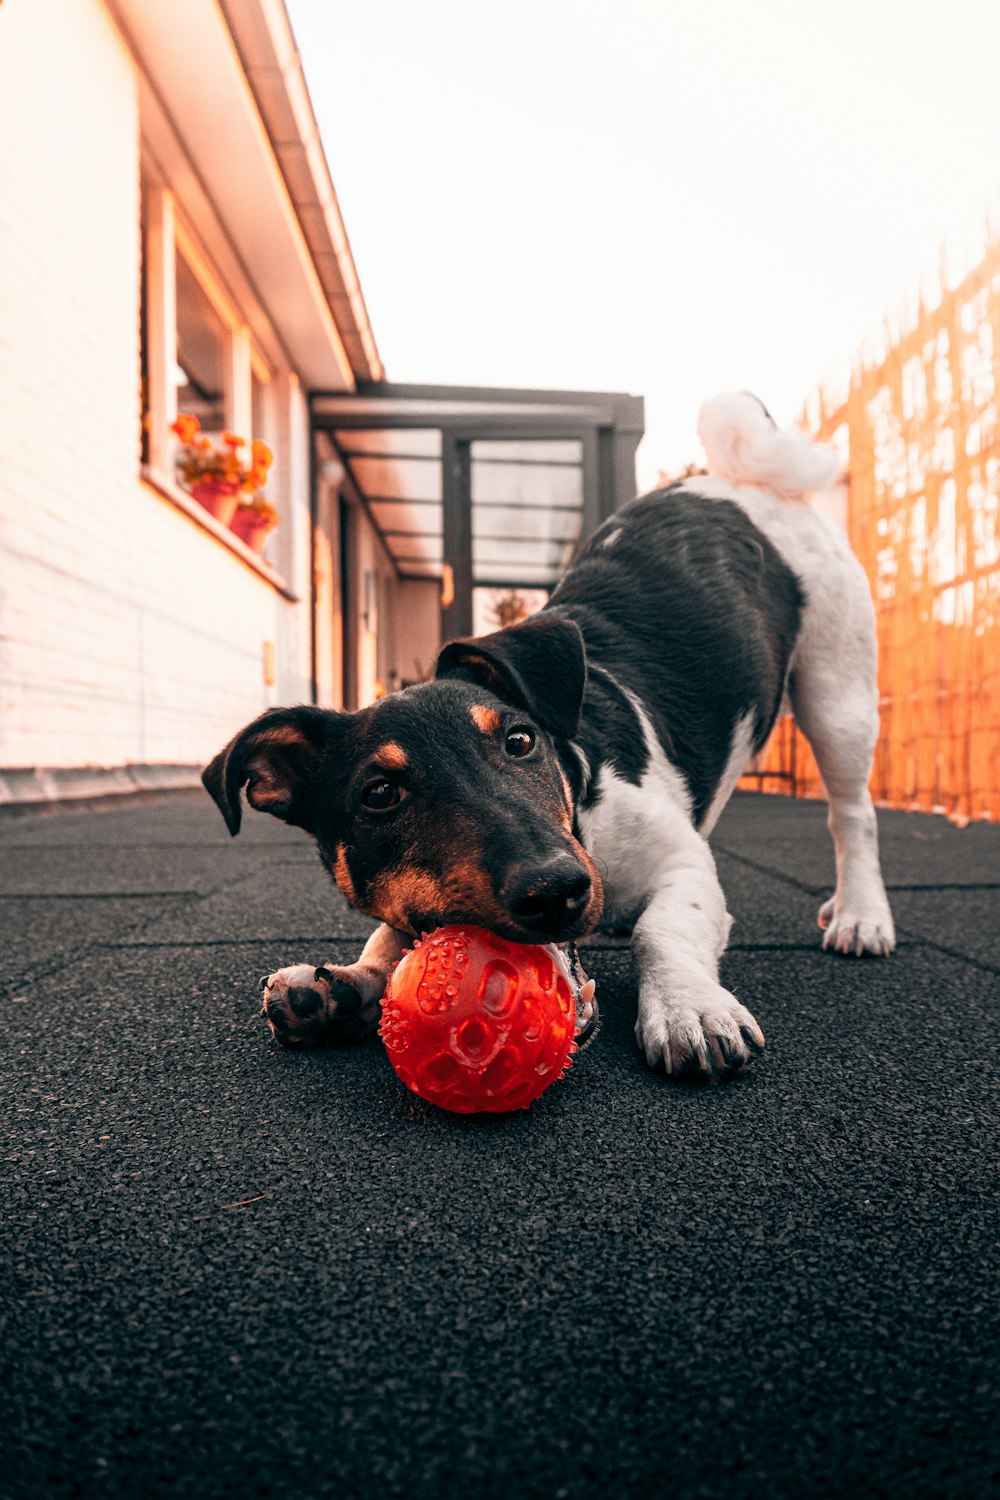 perro de pelo corto blanco y negro jugando a la pelota roja en la alfombra negra